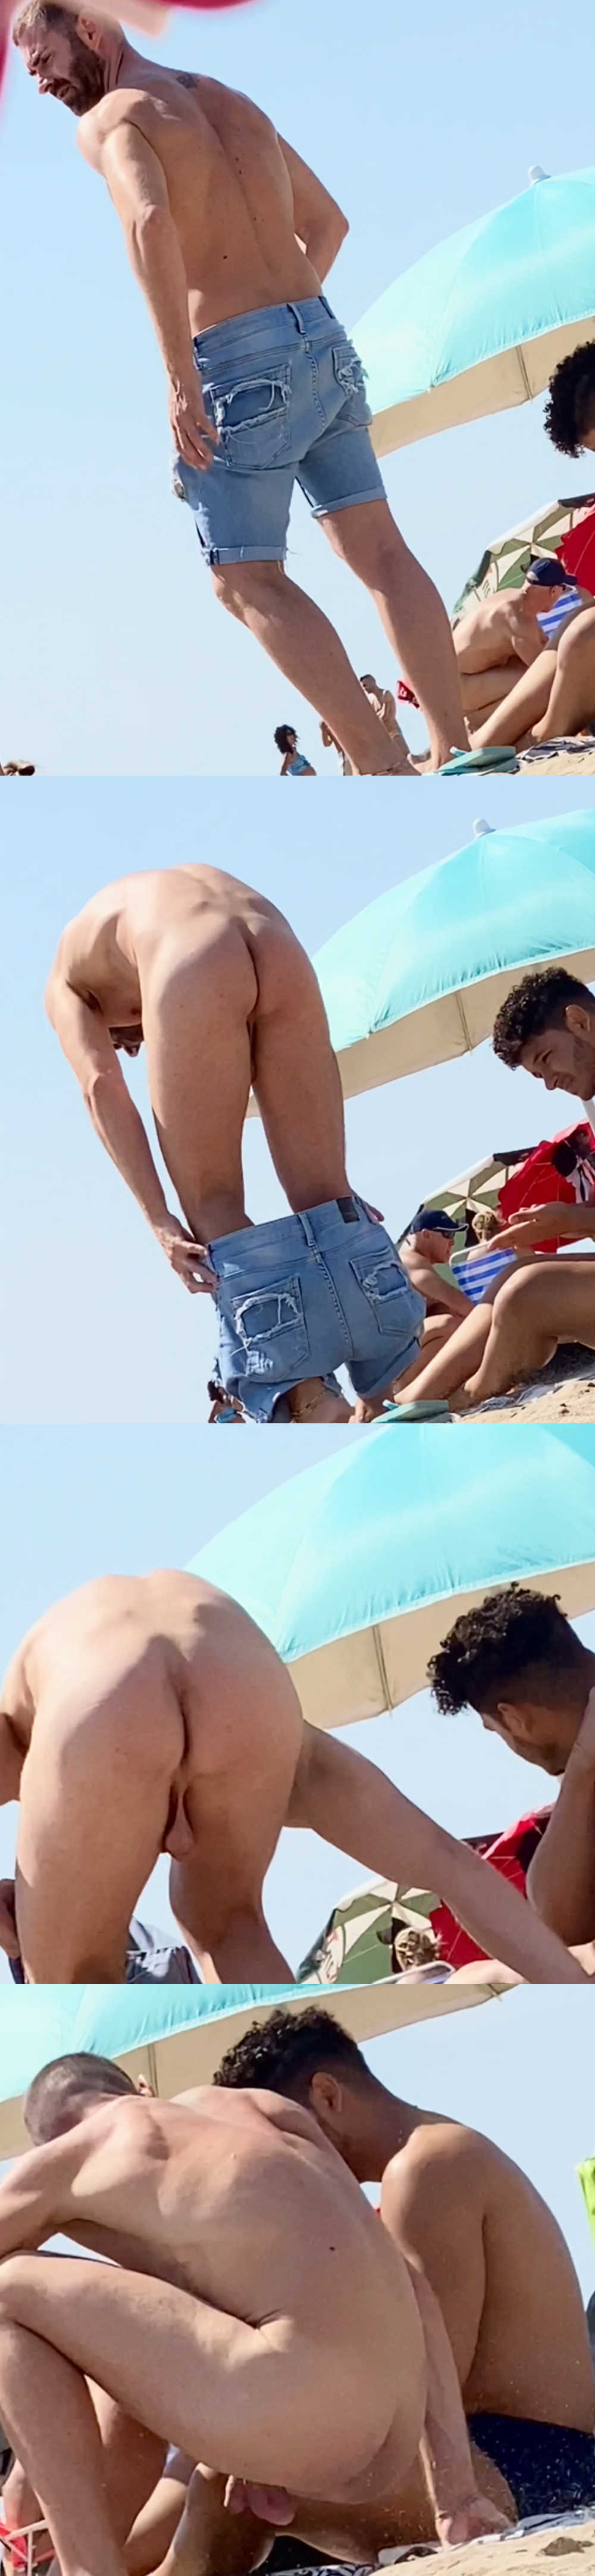 nudist guy undresisng at the nudist beach